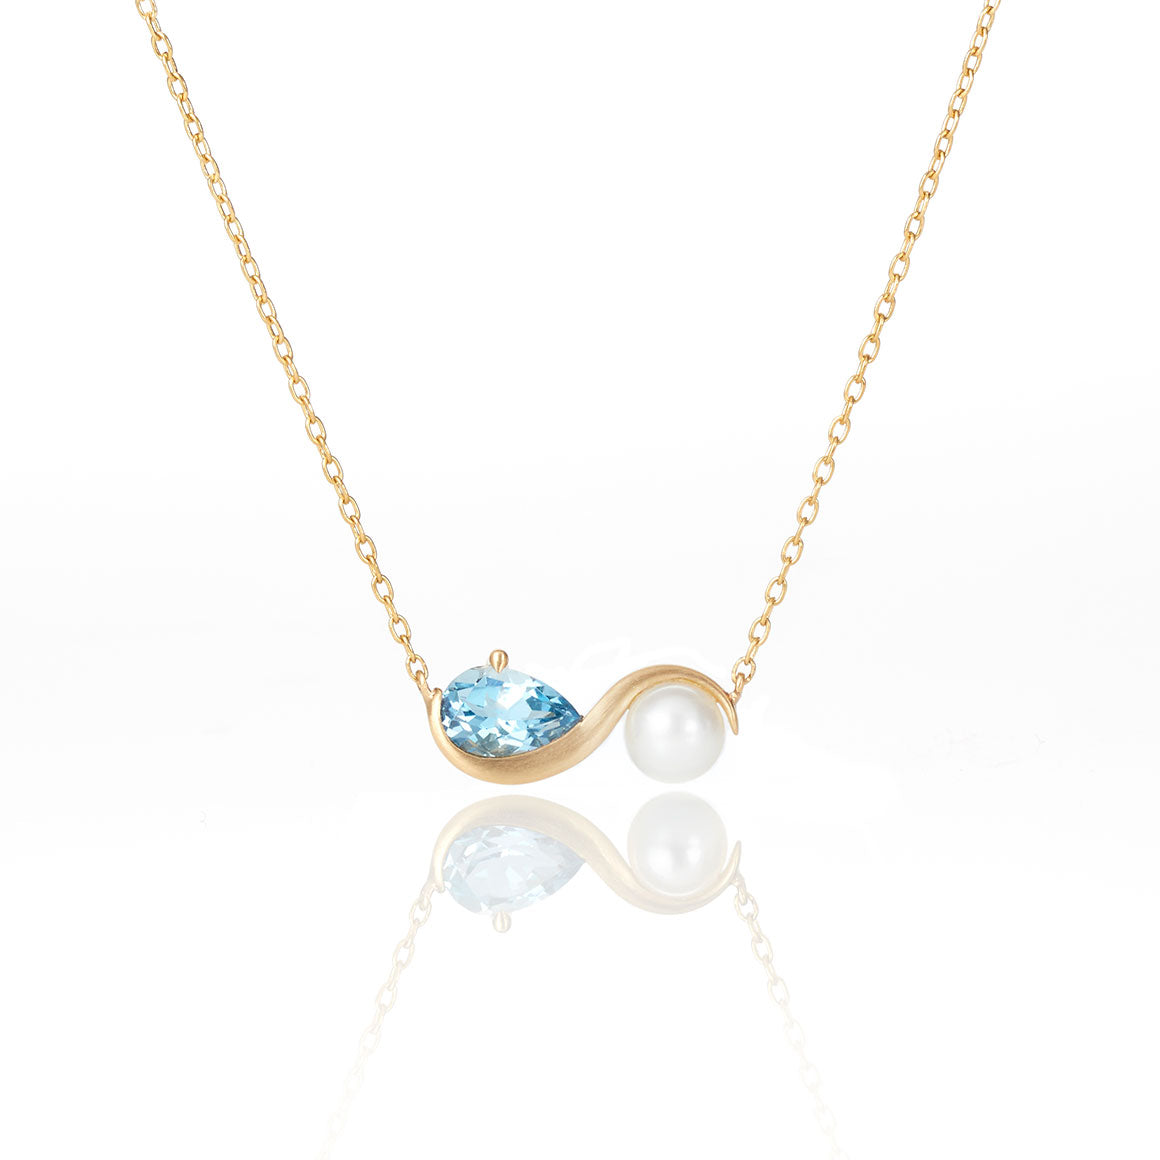 Pearl & London Blue Topaz necklace